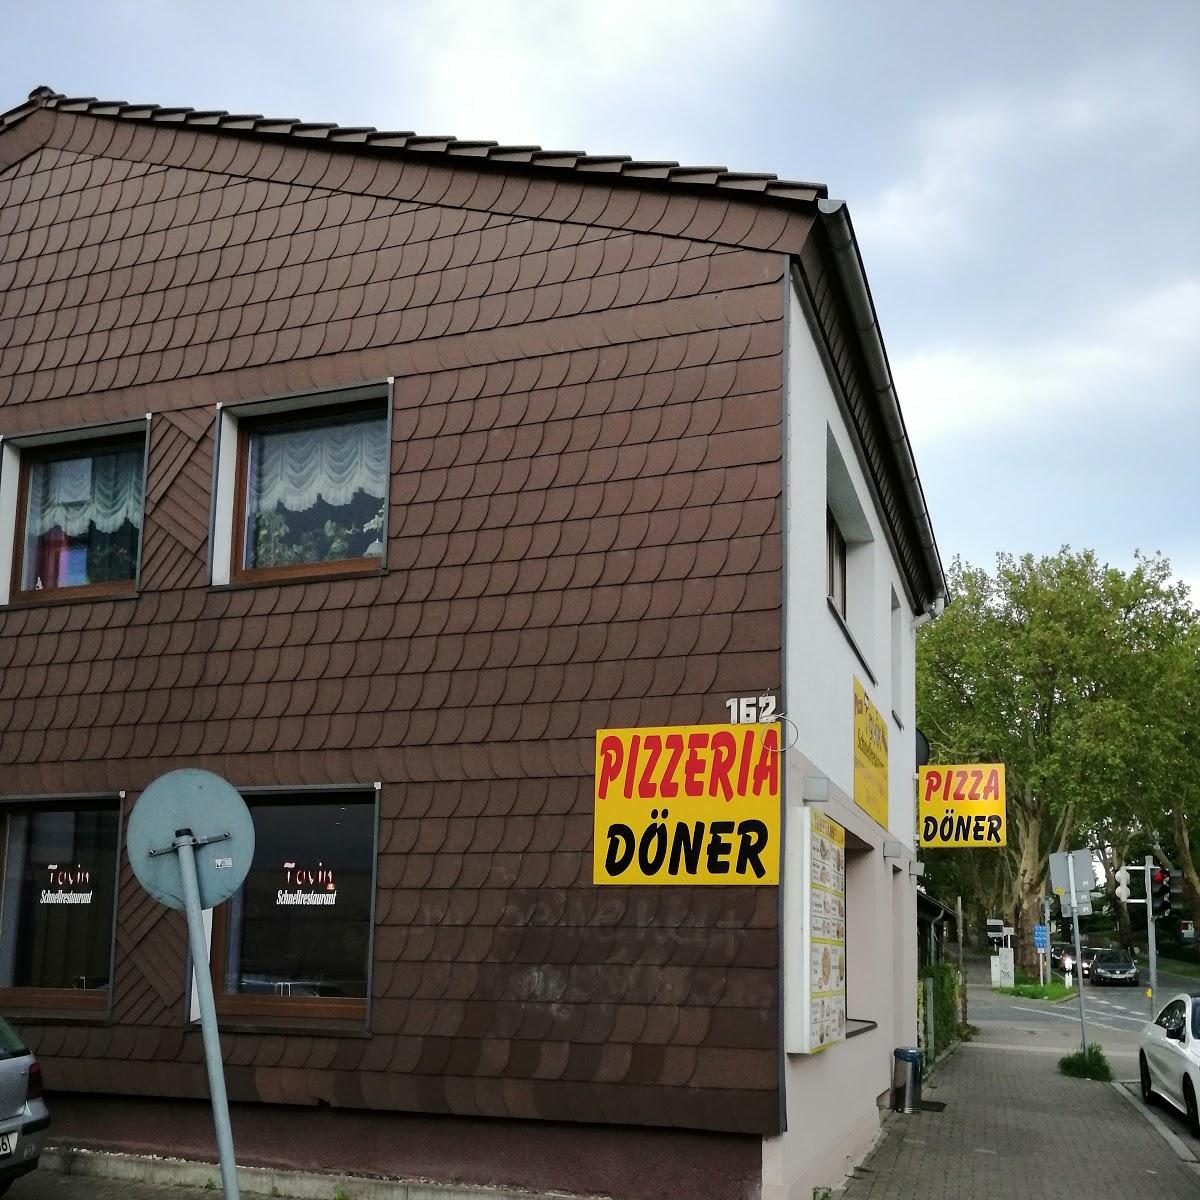 Restaurant "Tavin" in Dortmund